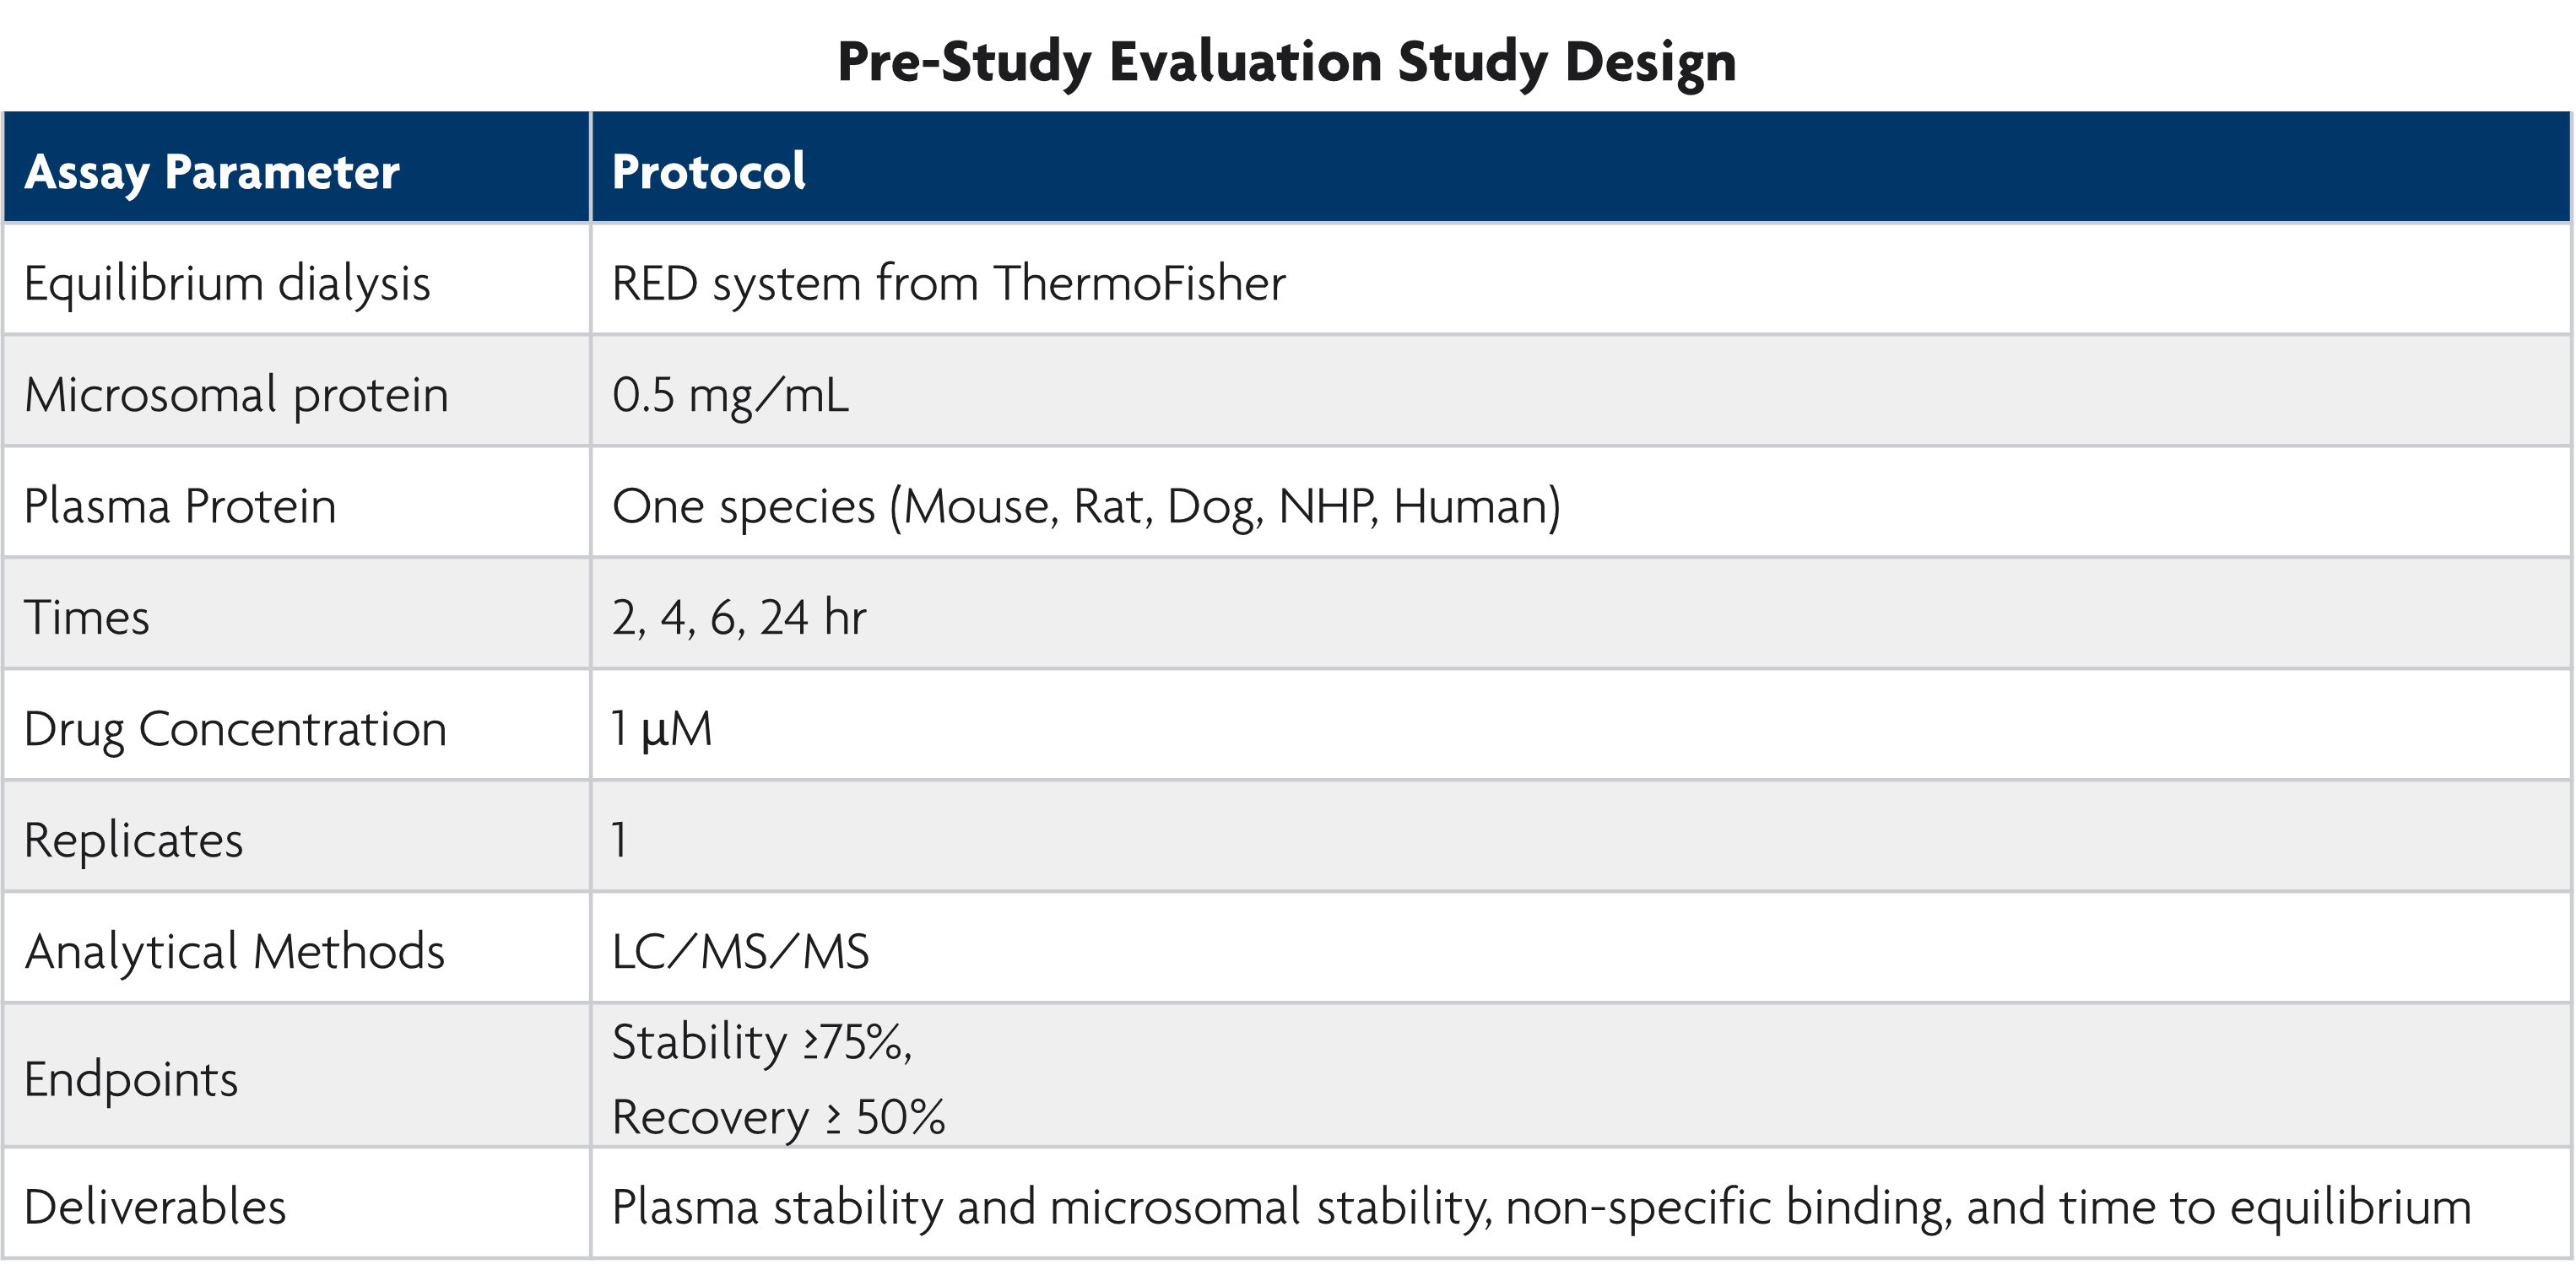 Plasma Protein Binding Assay Pre-study Evaluation Study Design